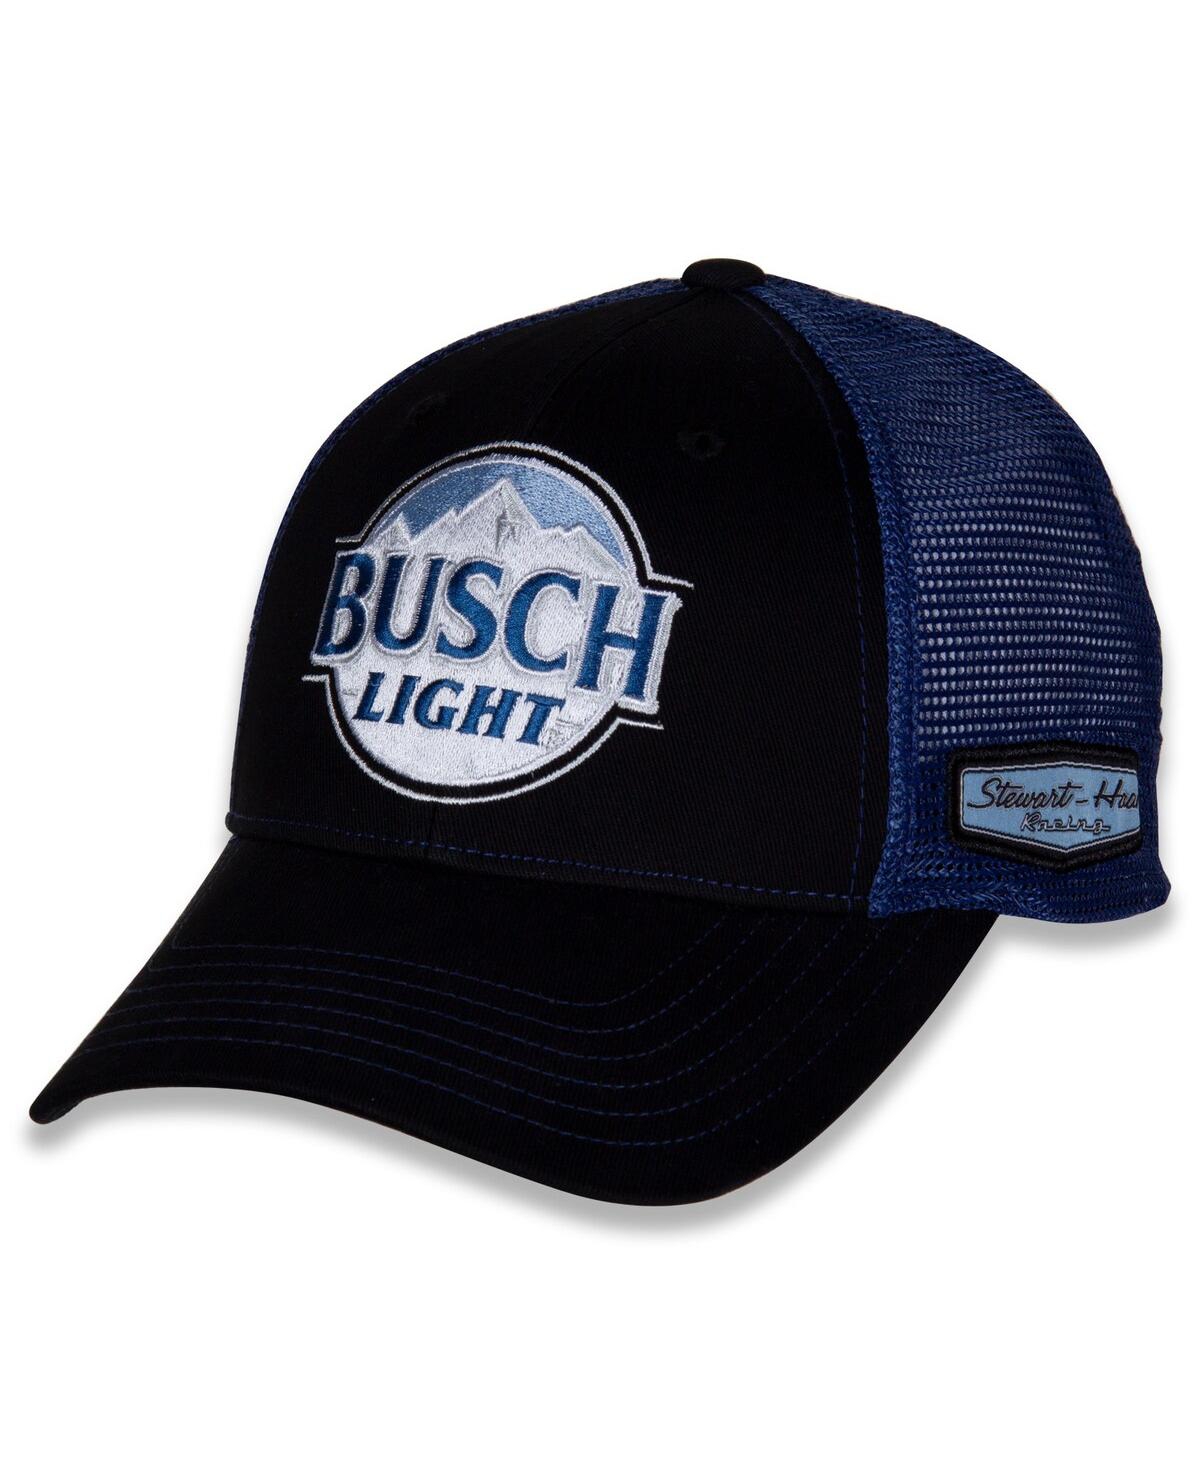 Stewart-haas Racing Team Collection Men's  Black, Blue Kevin Harvick Team Sponsor Adjustable Hat In Black,blue